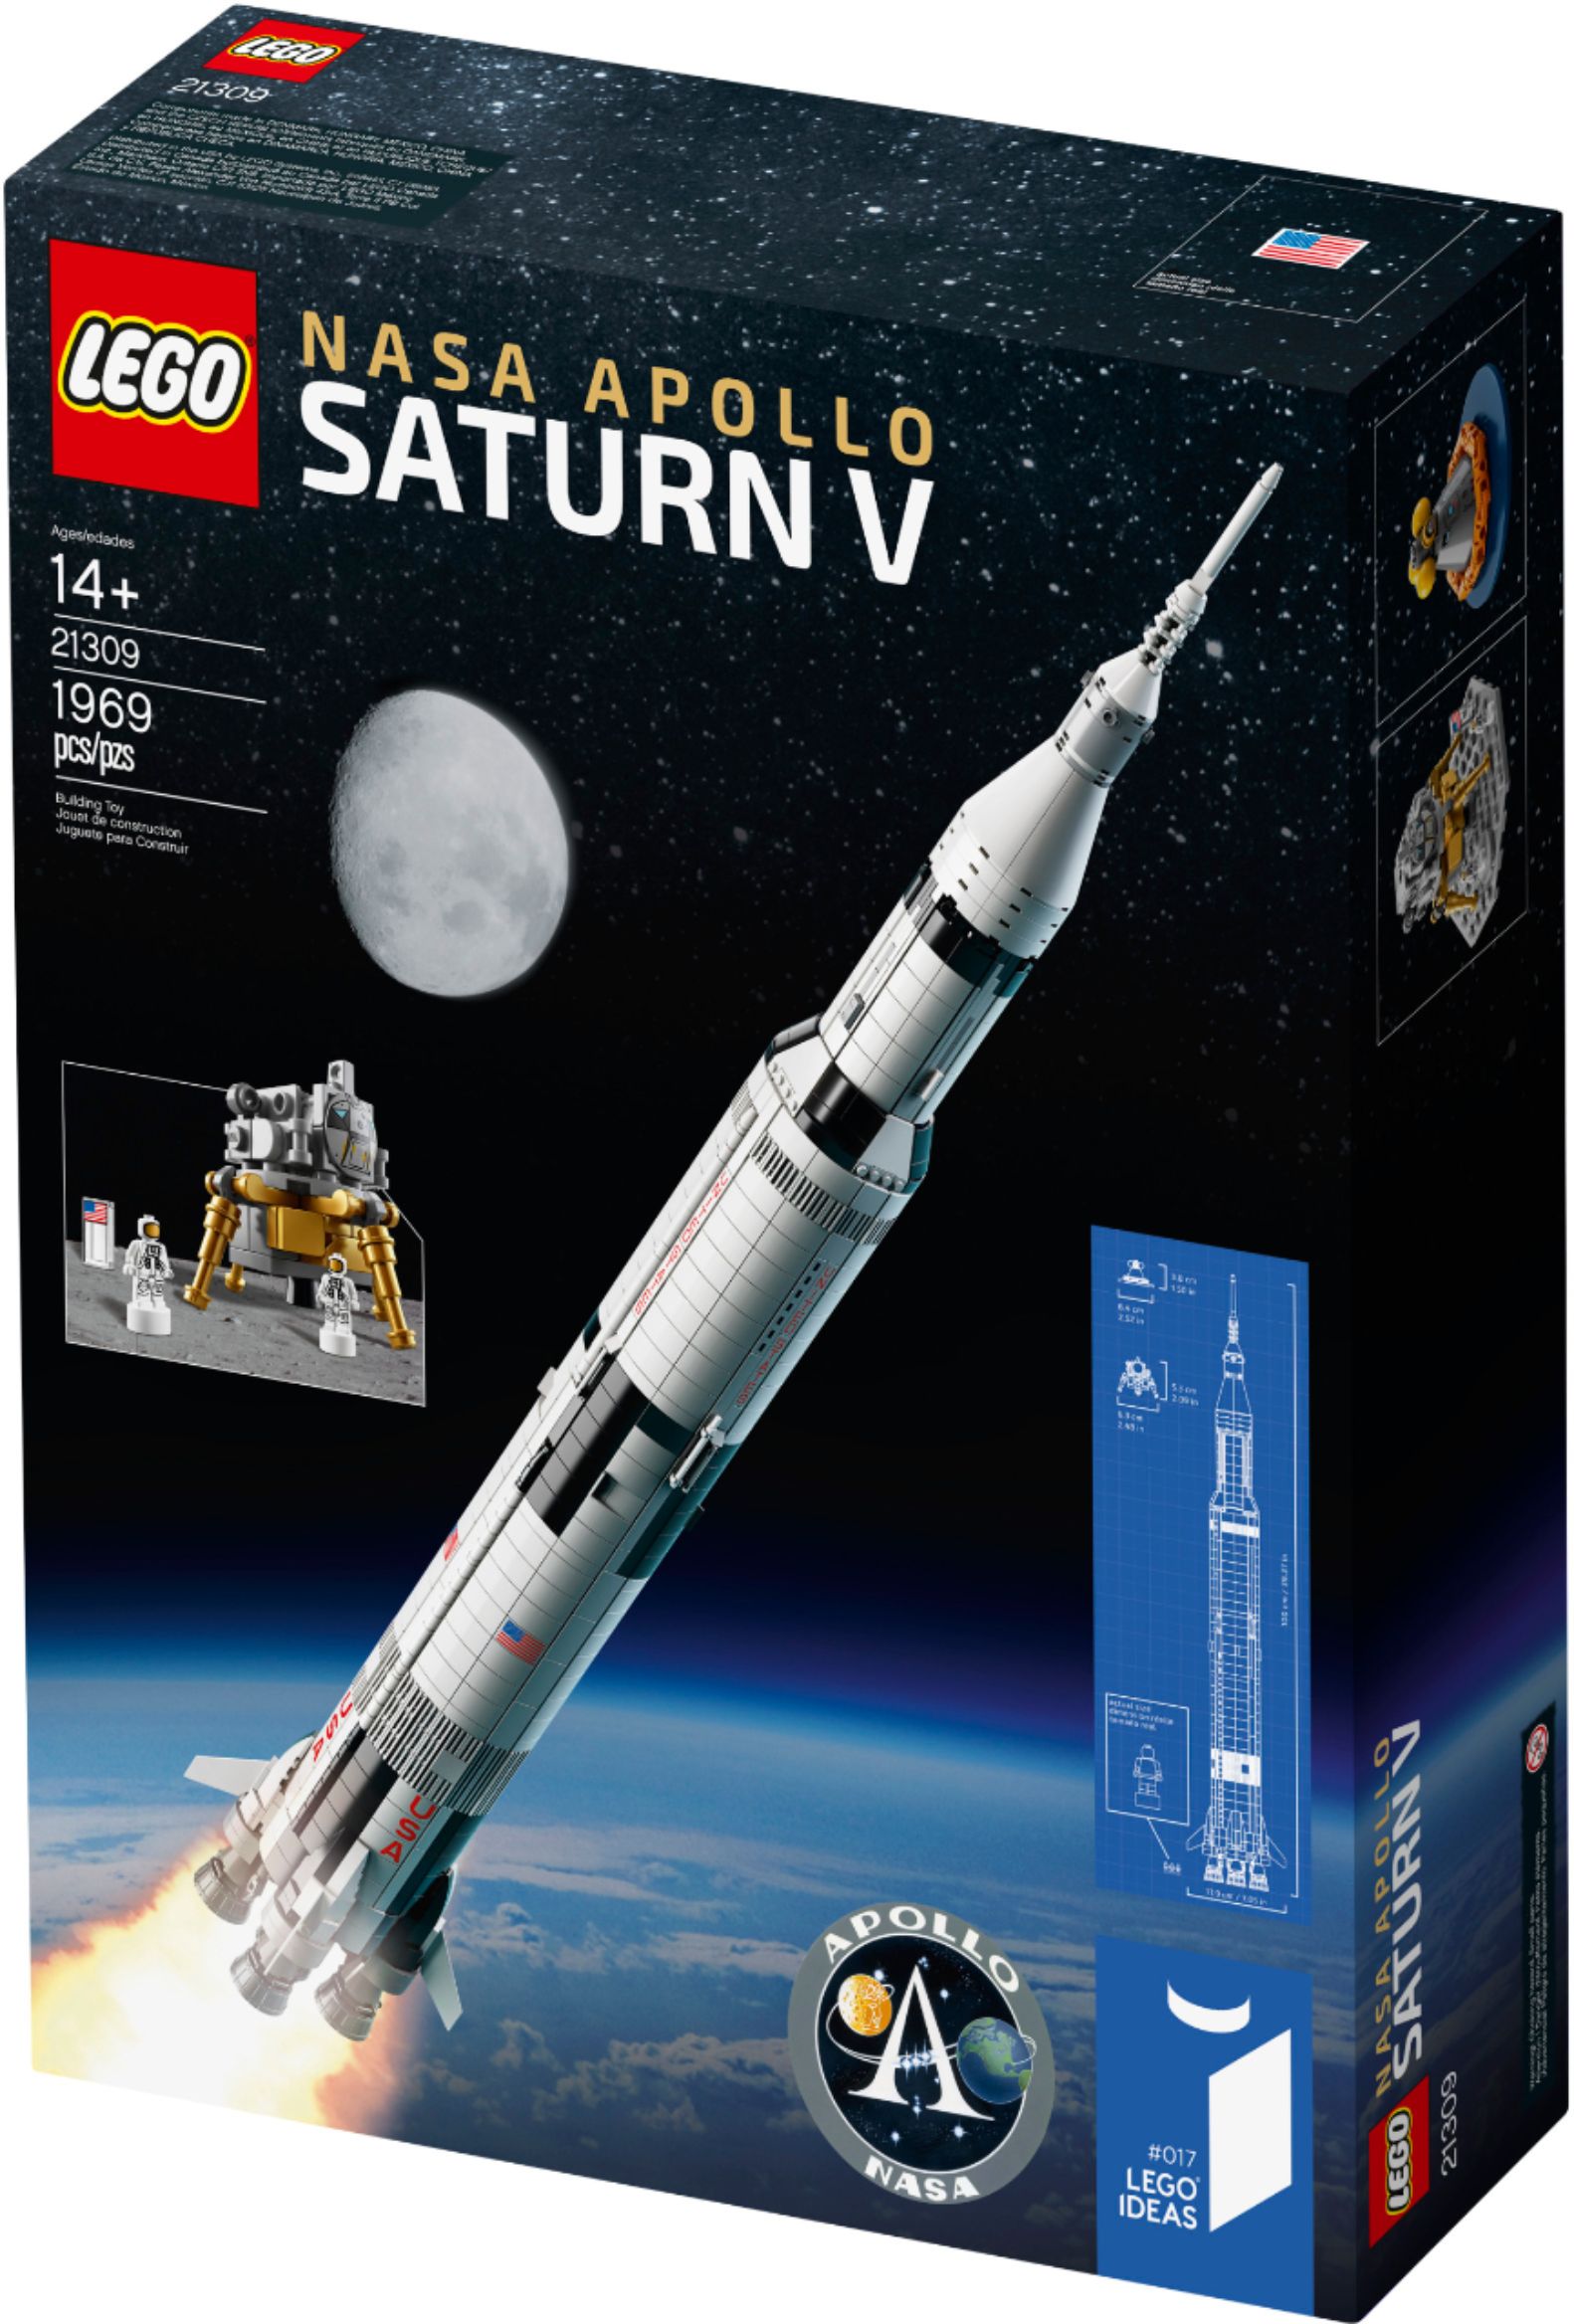 NASA Apollo Saturn V Lego 21309